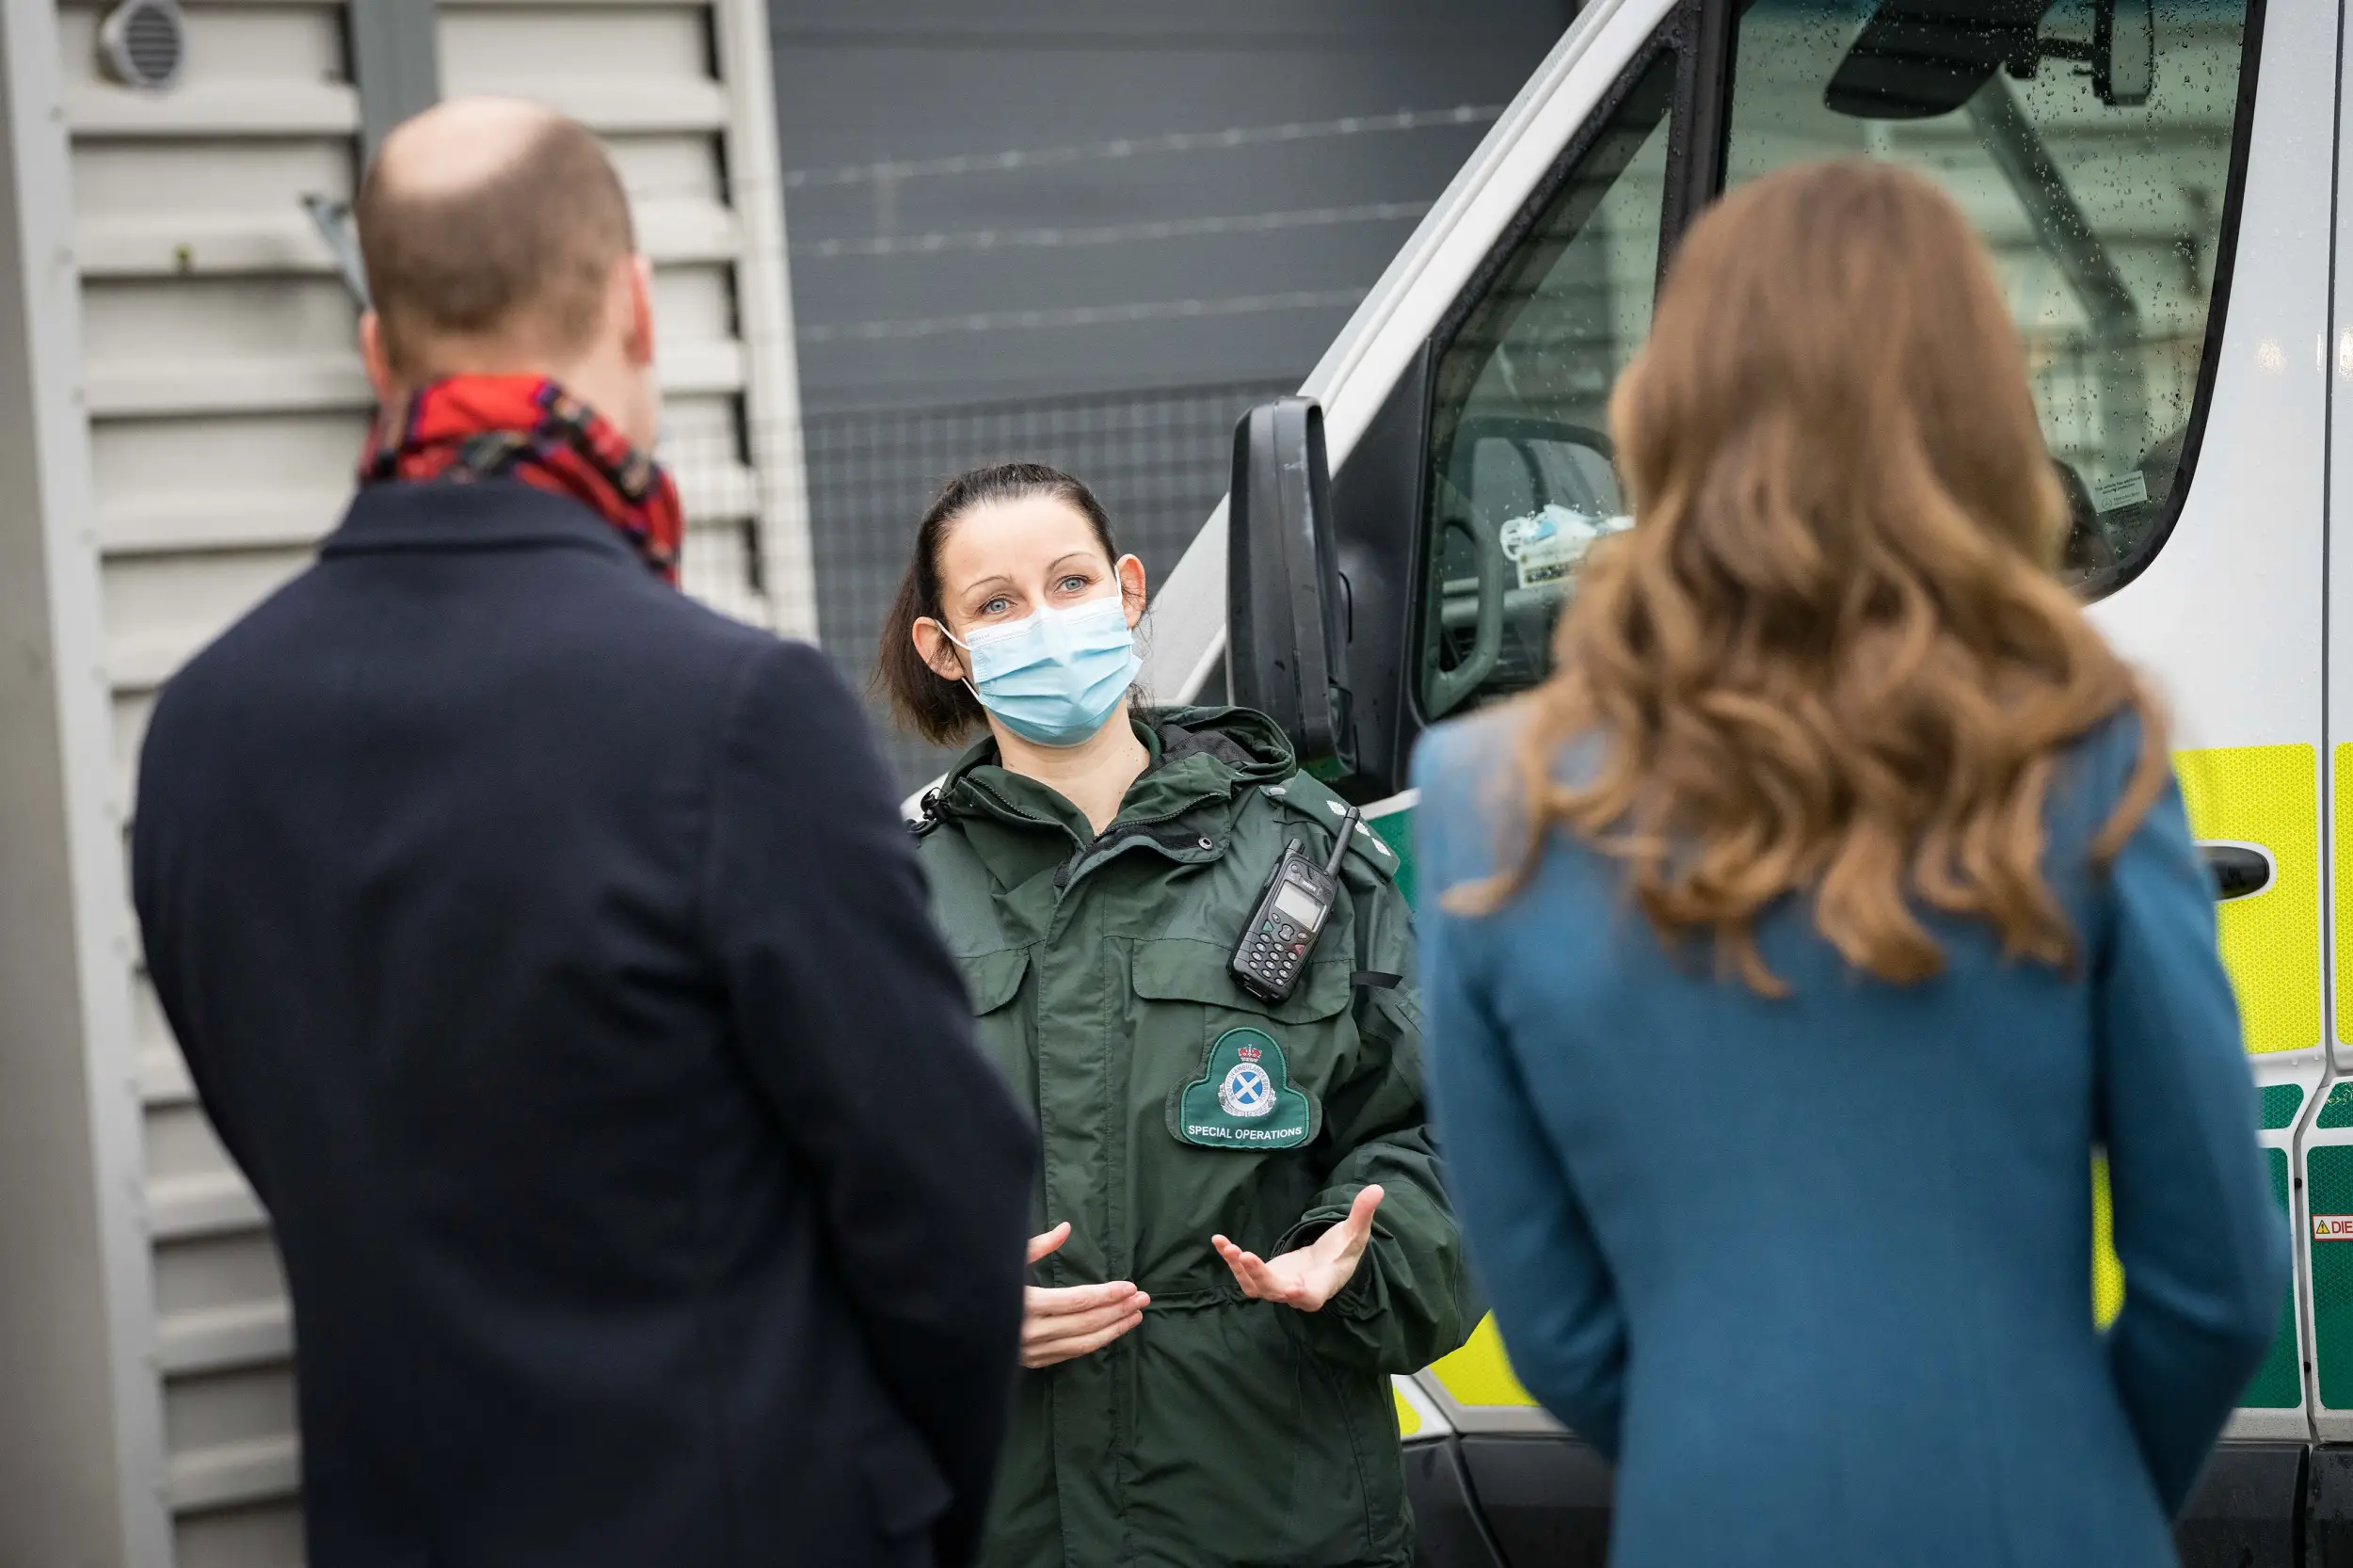 The Duke and Duchess of Cambridge thanked the Amublance Staff at Scottish Ambulance Station